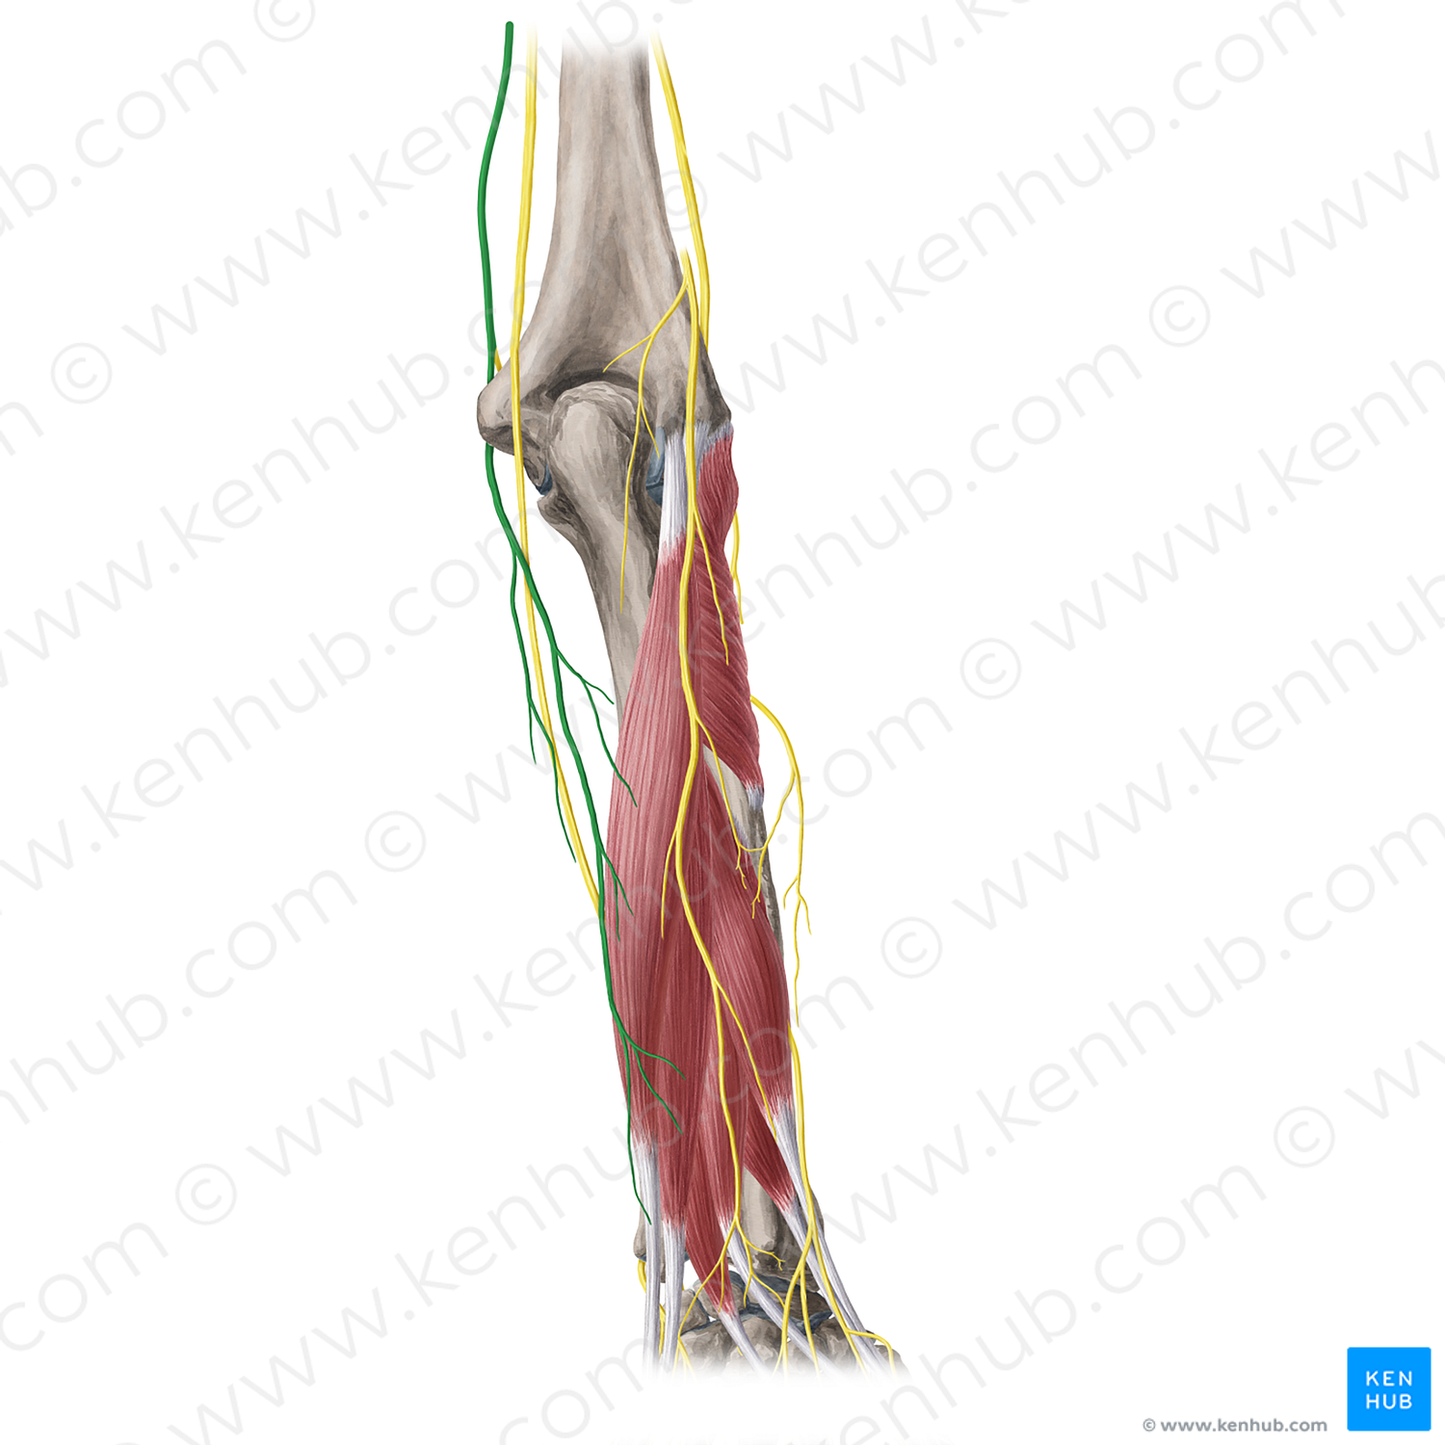 Medial antebrachial cutaneous nerve (#6364)